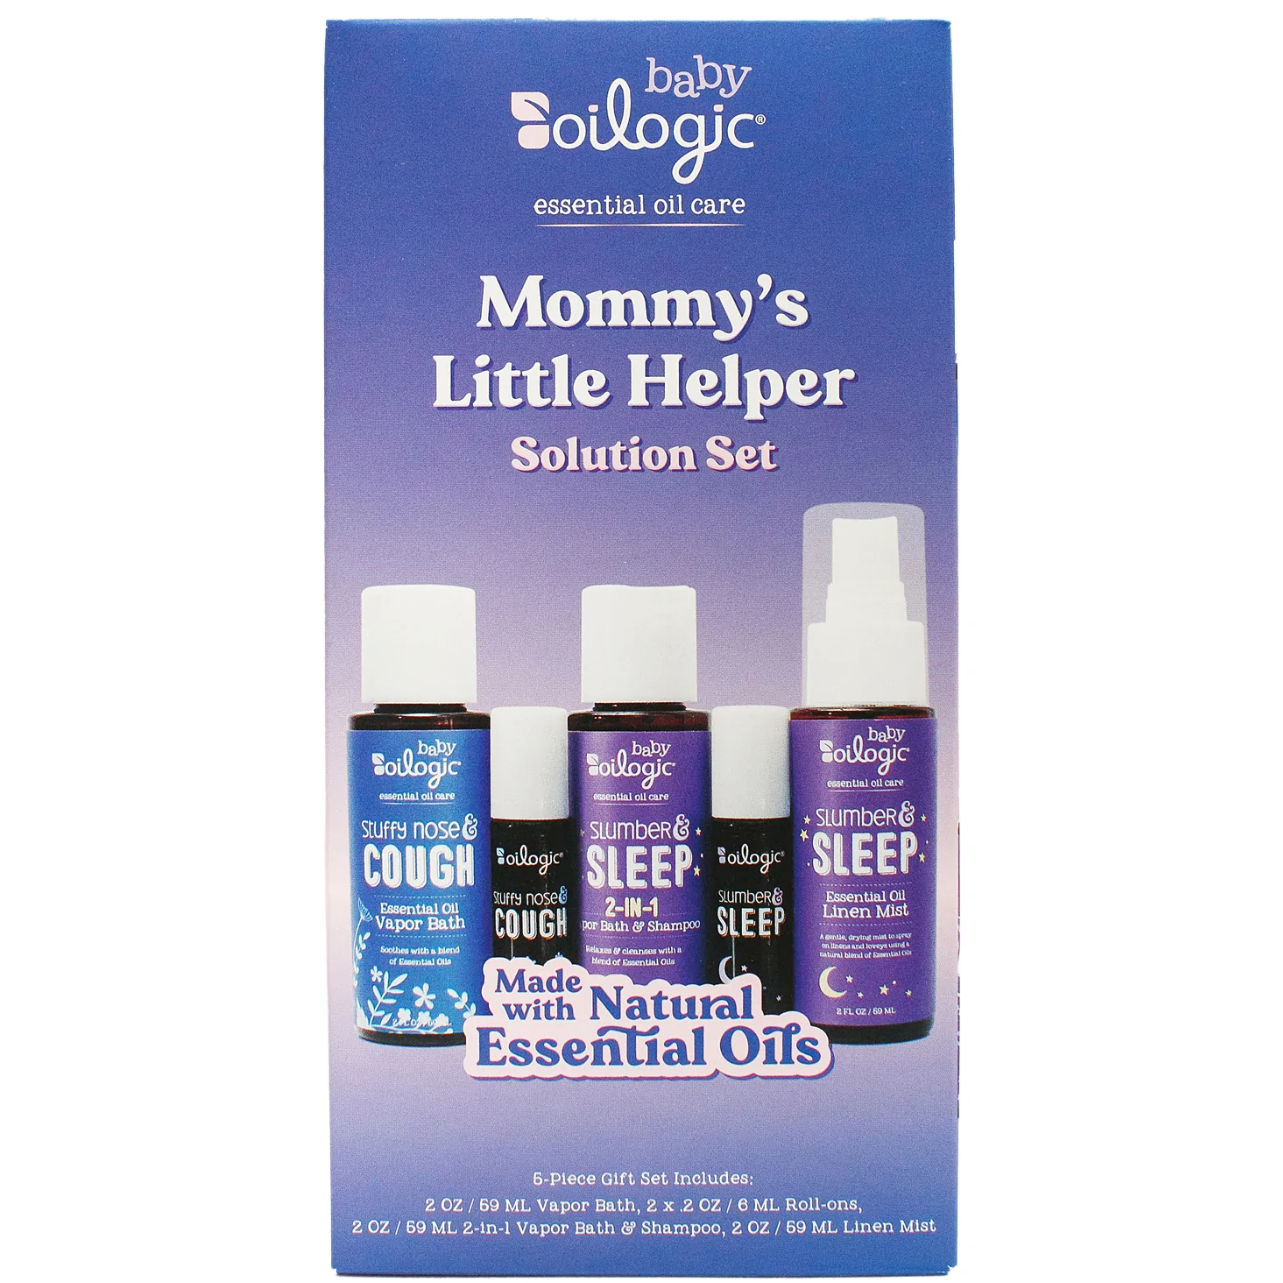 Oilogic Mommy's Little Helper Solutions Set